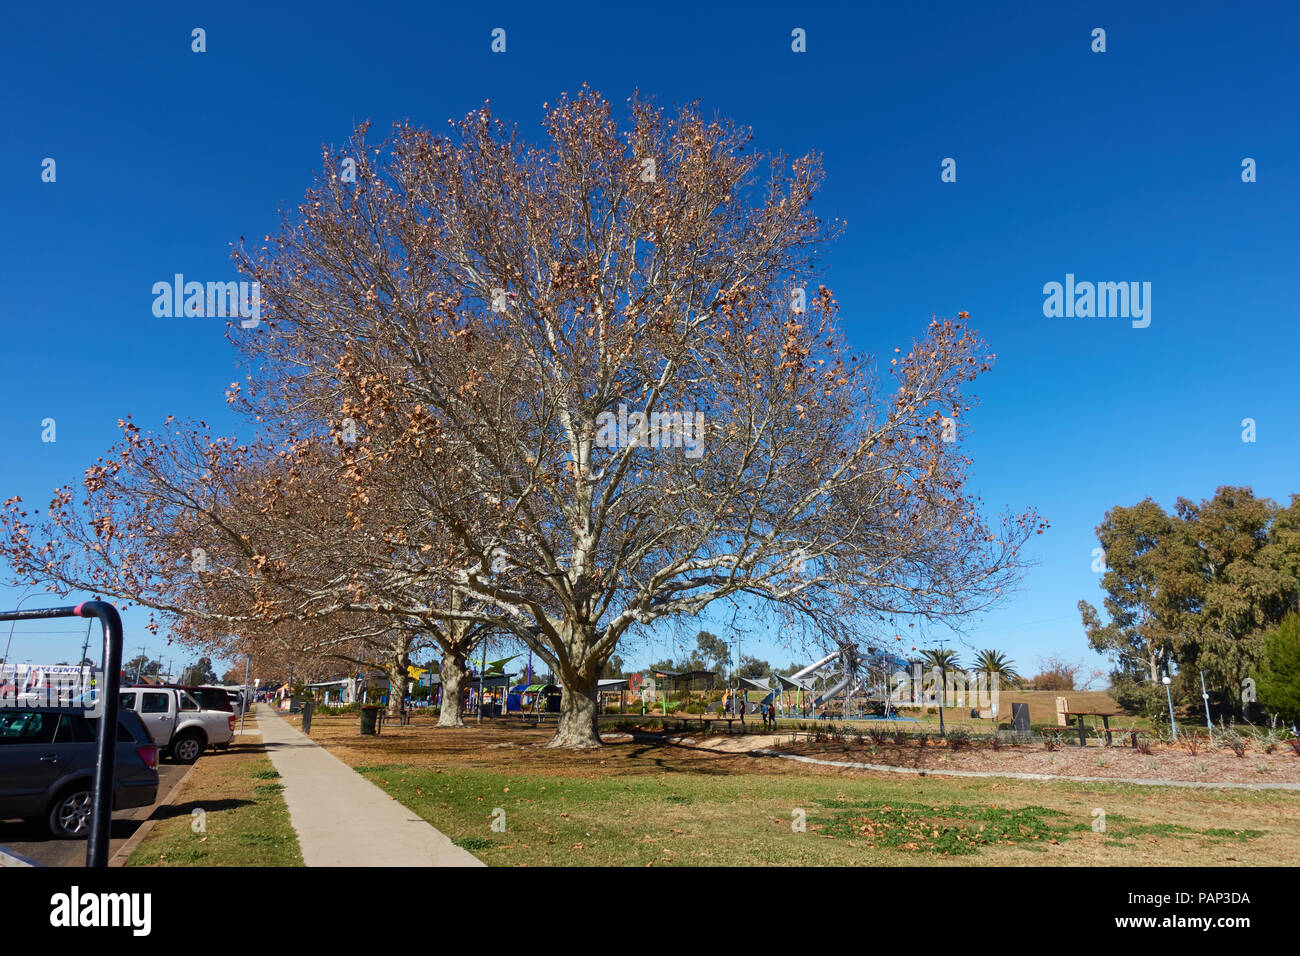 London Plane Tree in winter with children's playground in background. Bicentennial Park Tamworth NSW Australia. Stock Photo